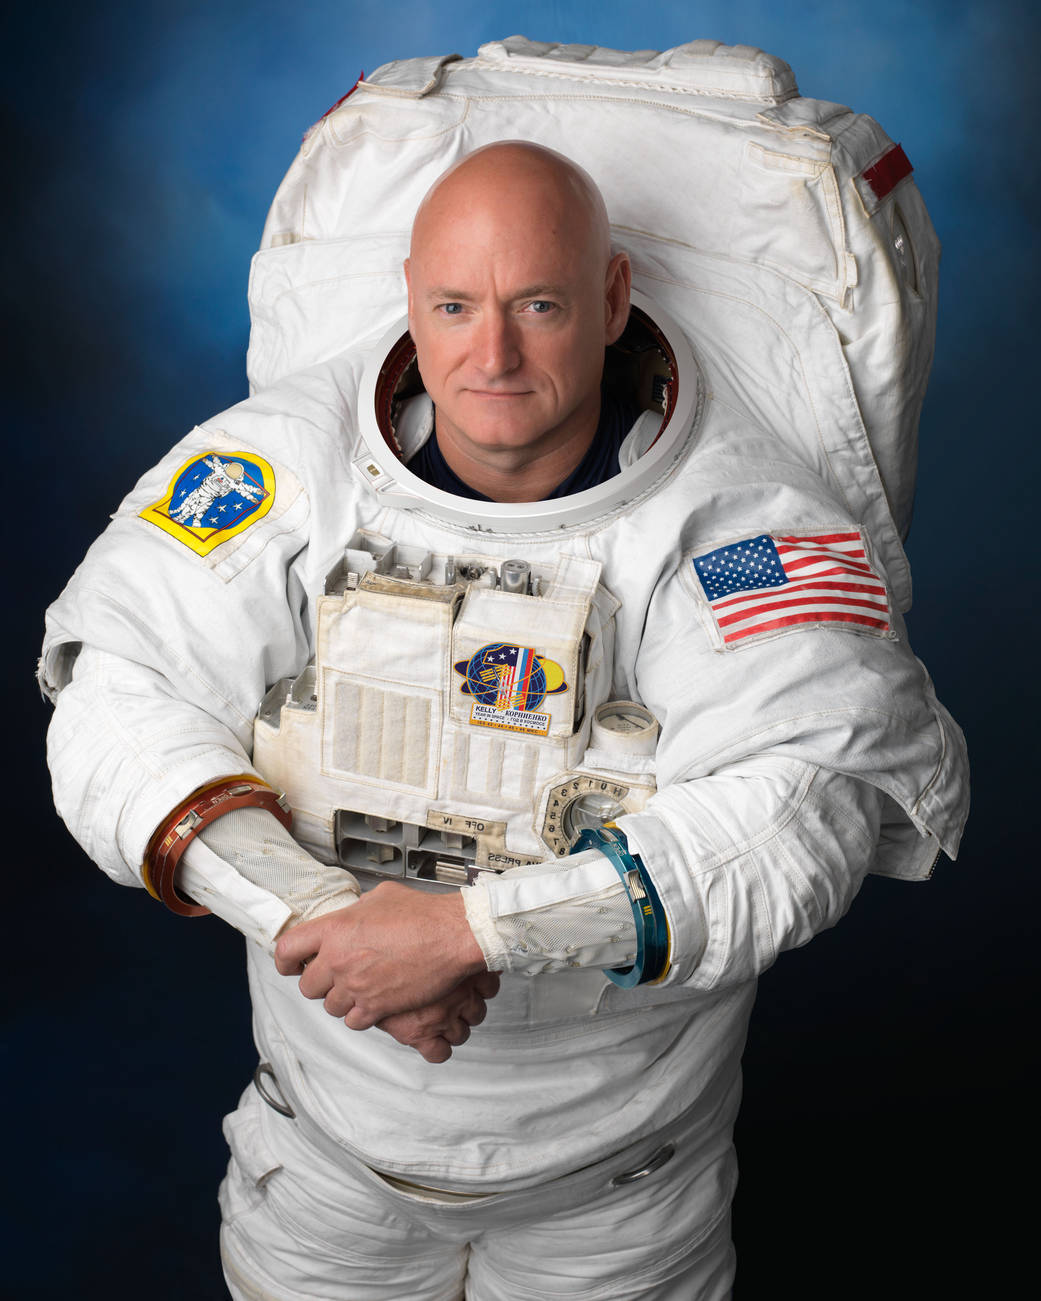  NASA Astronaut Scott Kelly